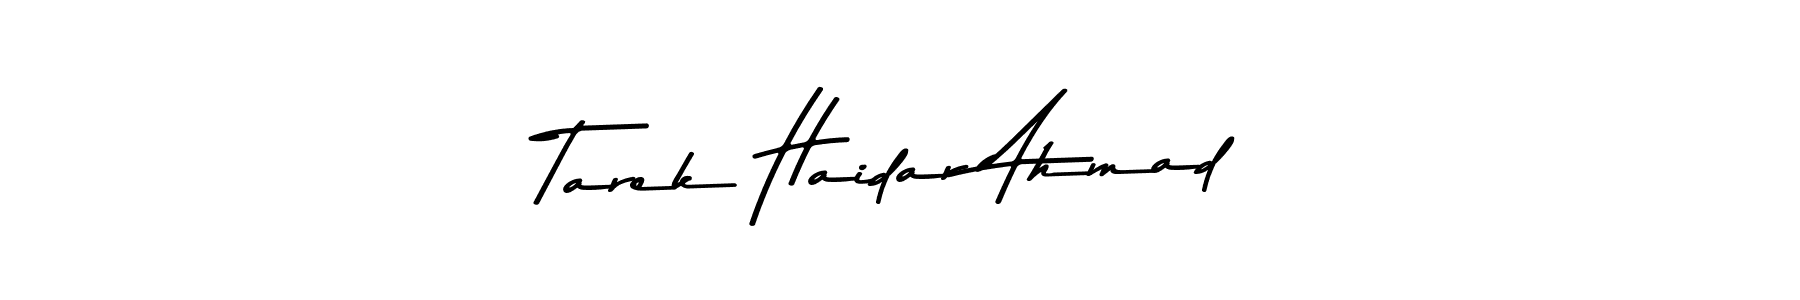 Make a beautiful signature design for name Tarek Haidar Ahmad. Use this online signature maker to create a handwritten signature for free. Tarek Haidar Ahmad signature style 9 images and pictures png